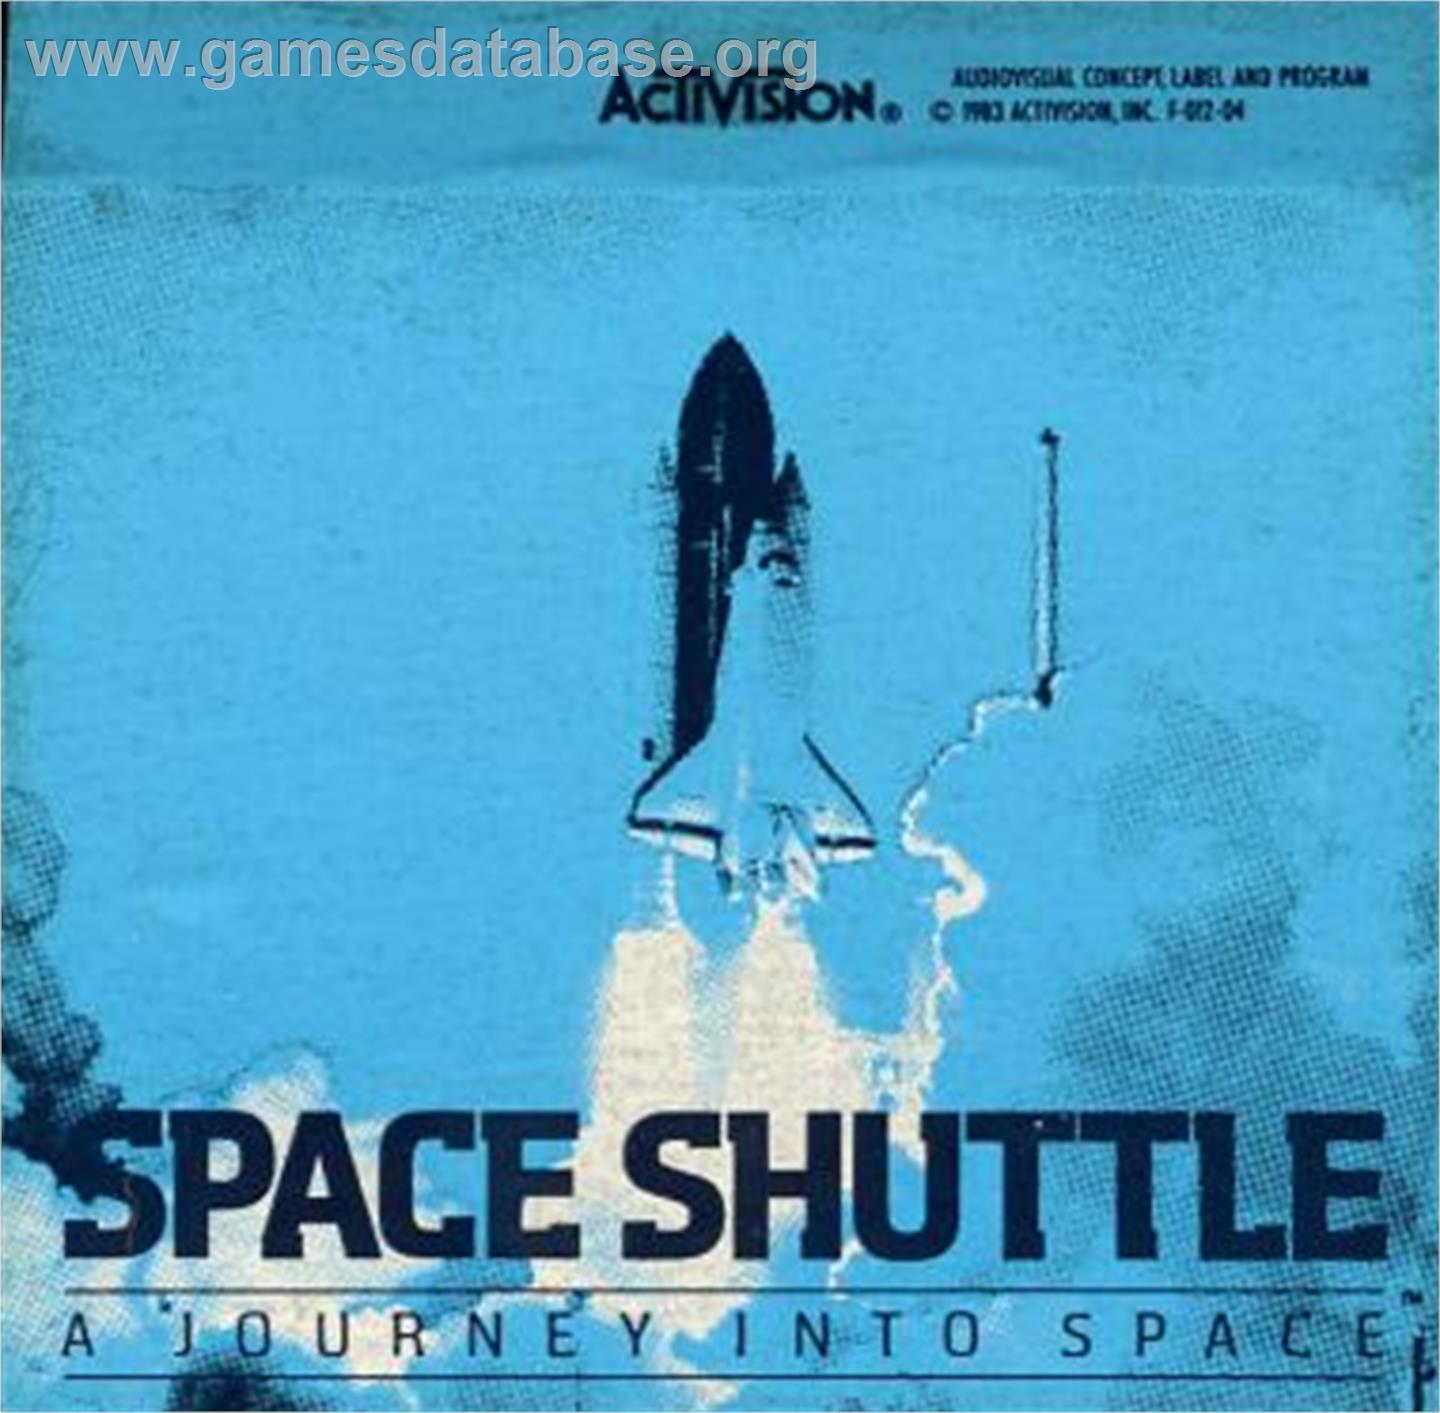 Space Shuttle: A Journey into Space - Atari 5200 - Artwork - Cartridge Top